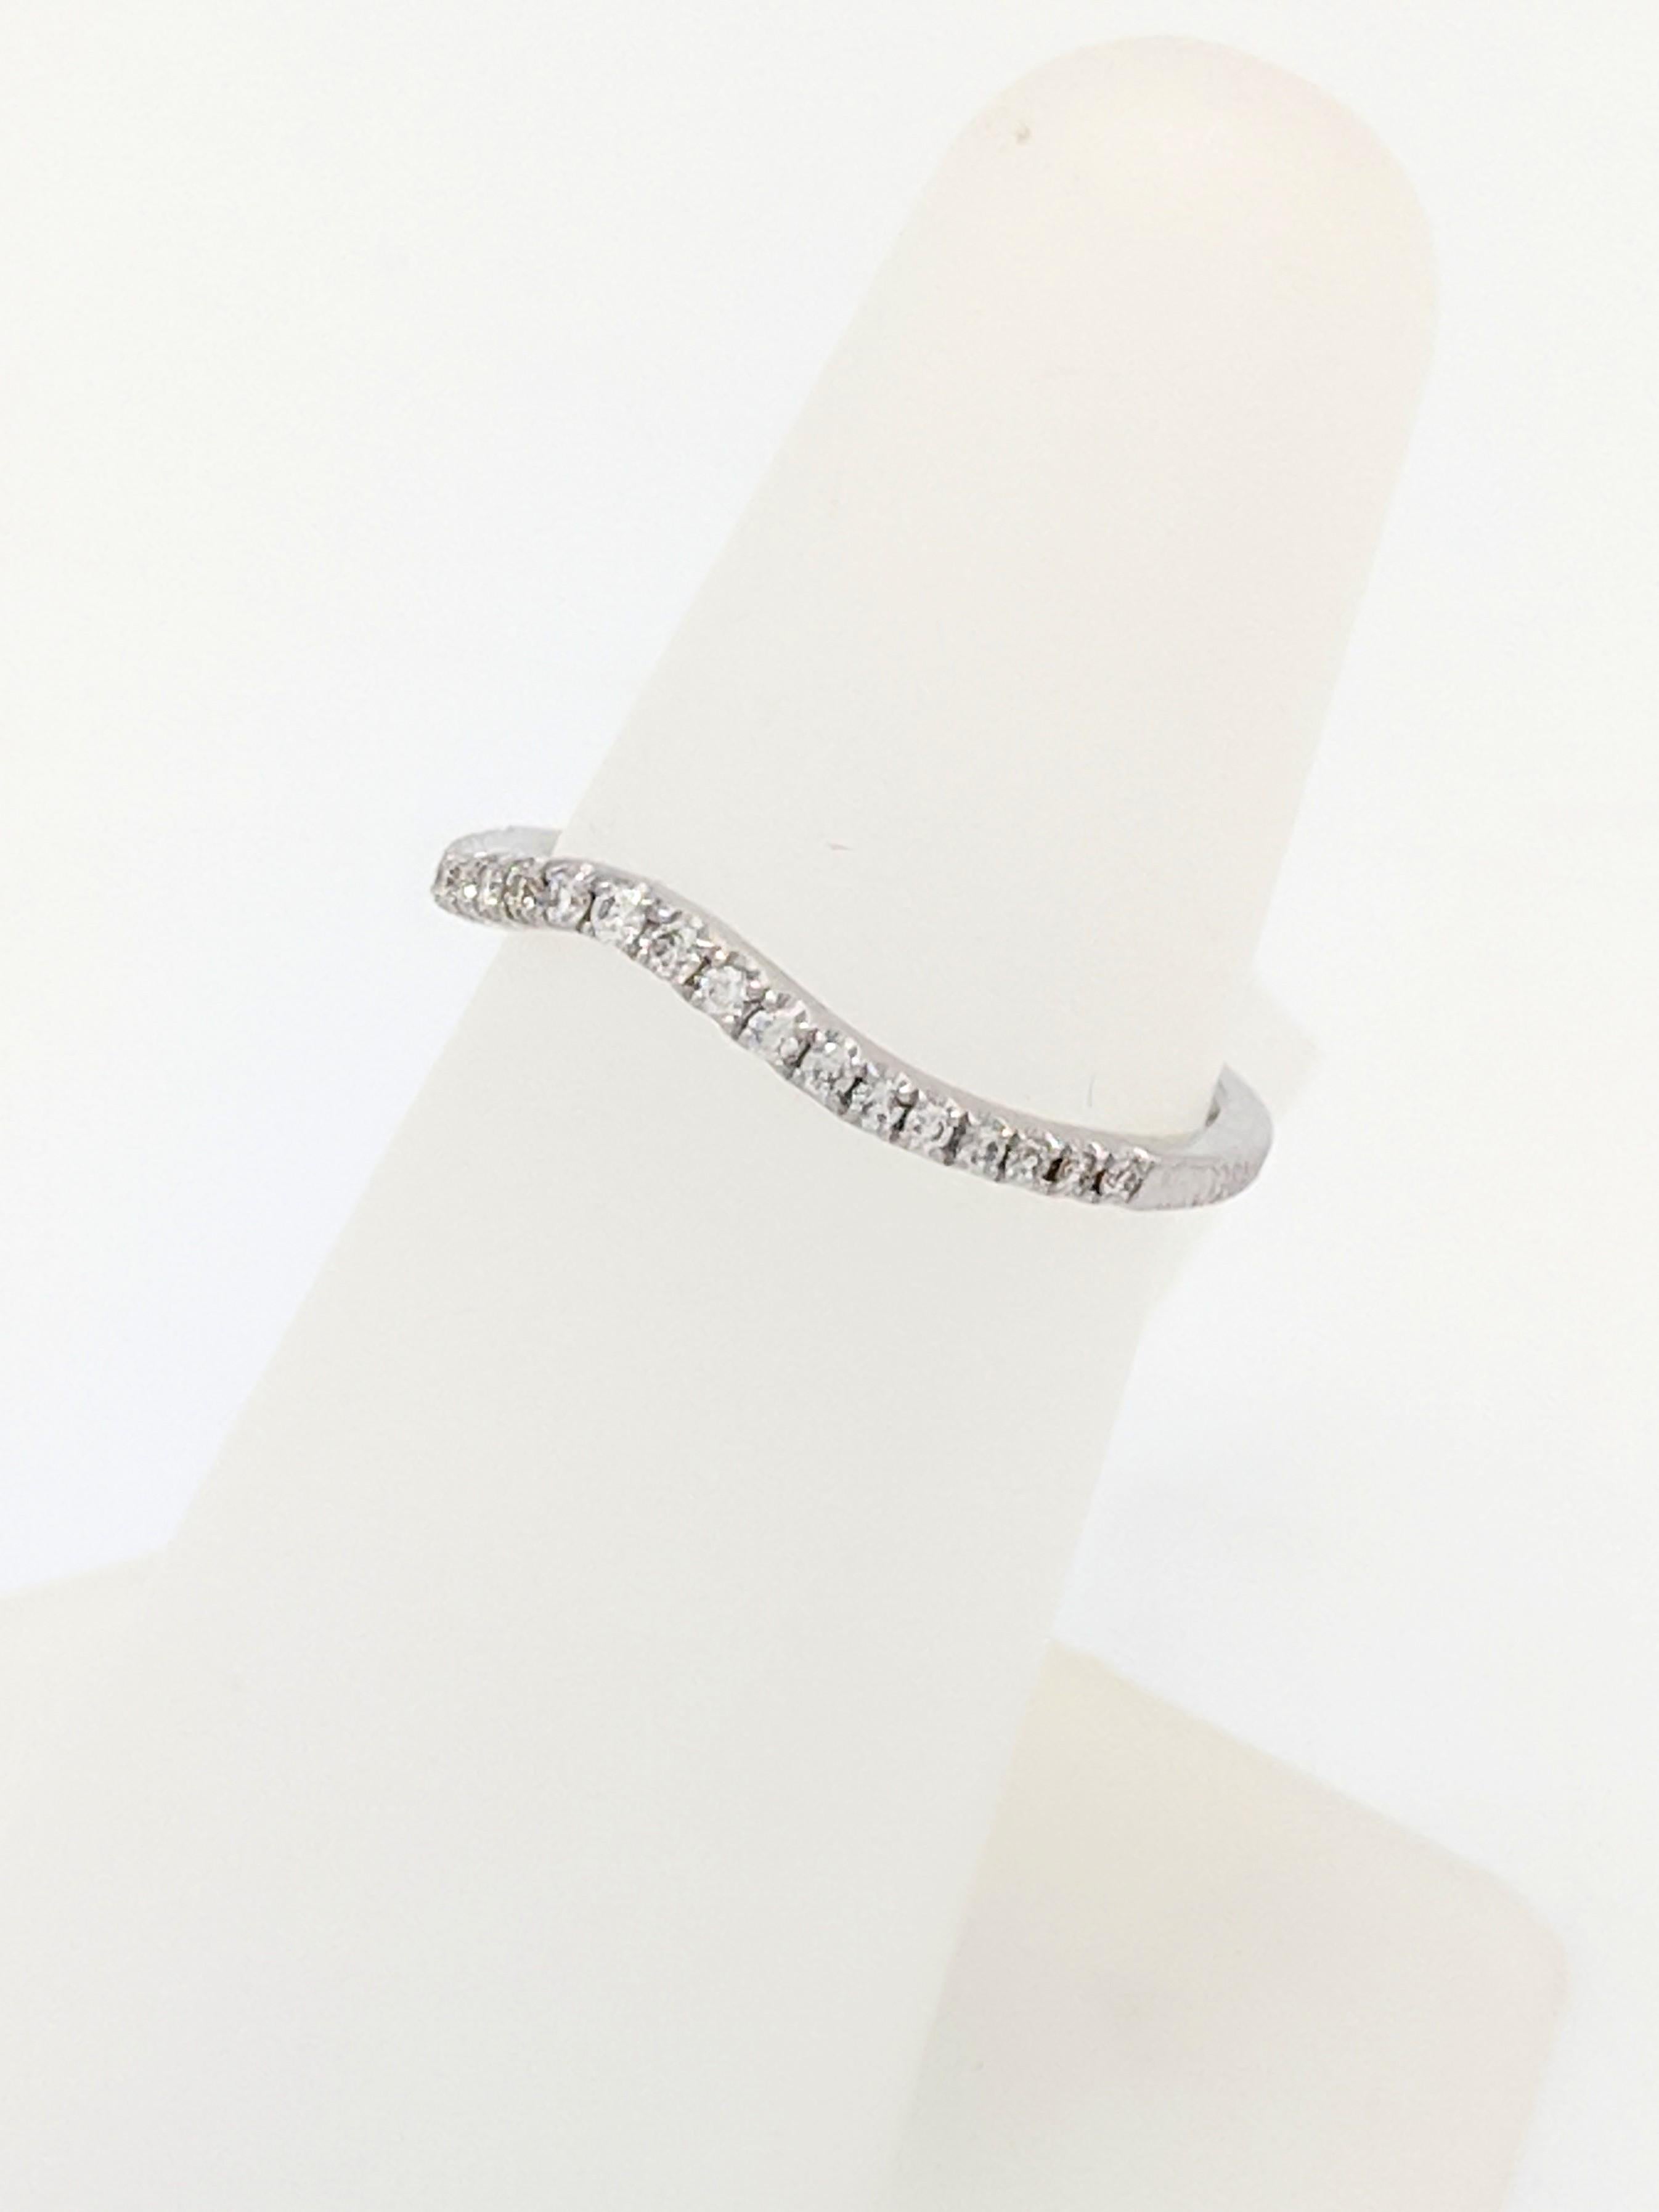 Contemporary 18 Karat White Gold .18 Carat Pave Diamond Curved Wedding Band Ring